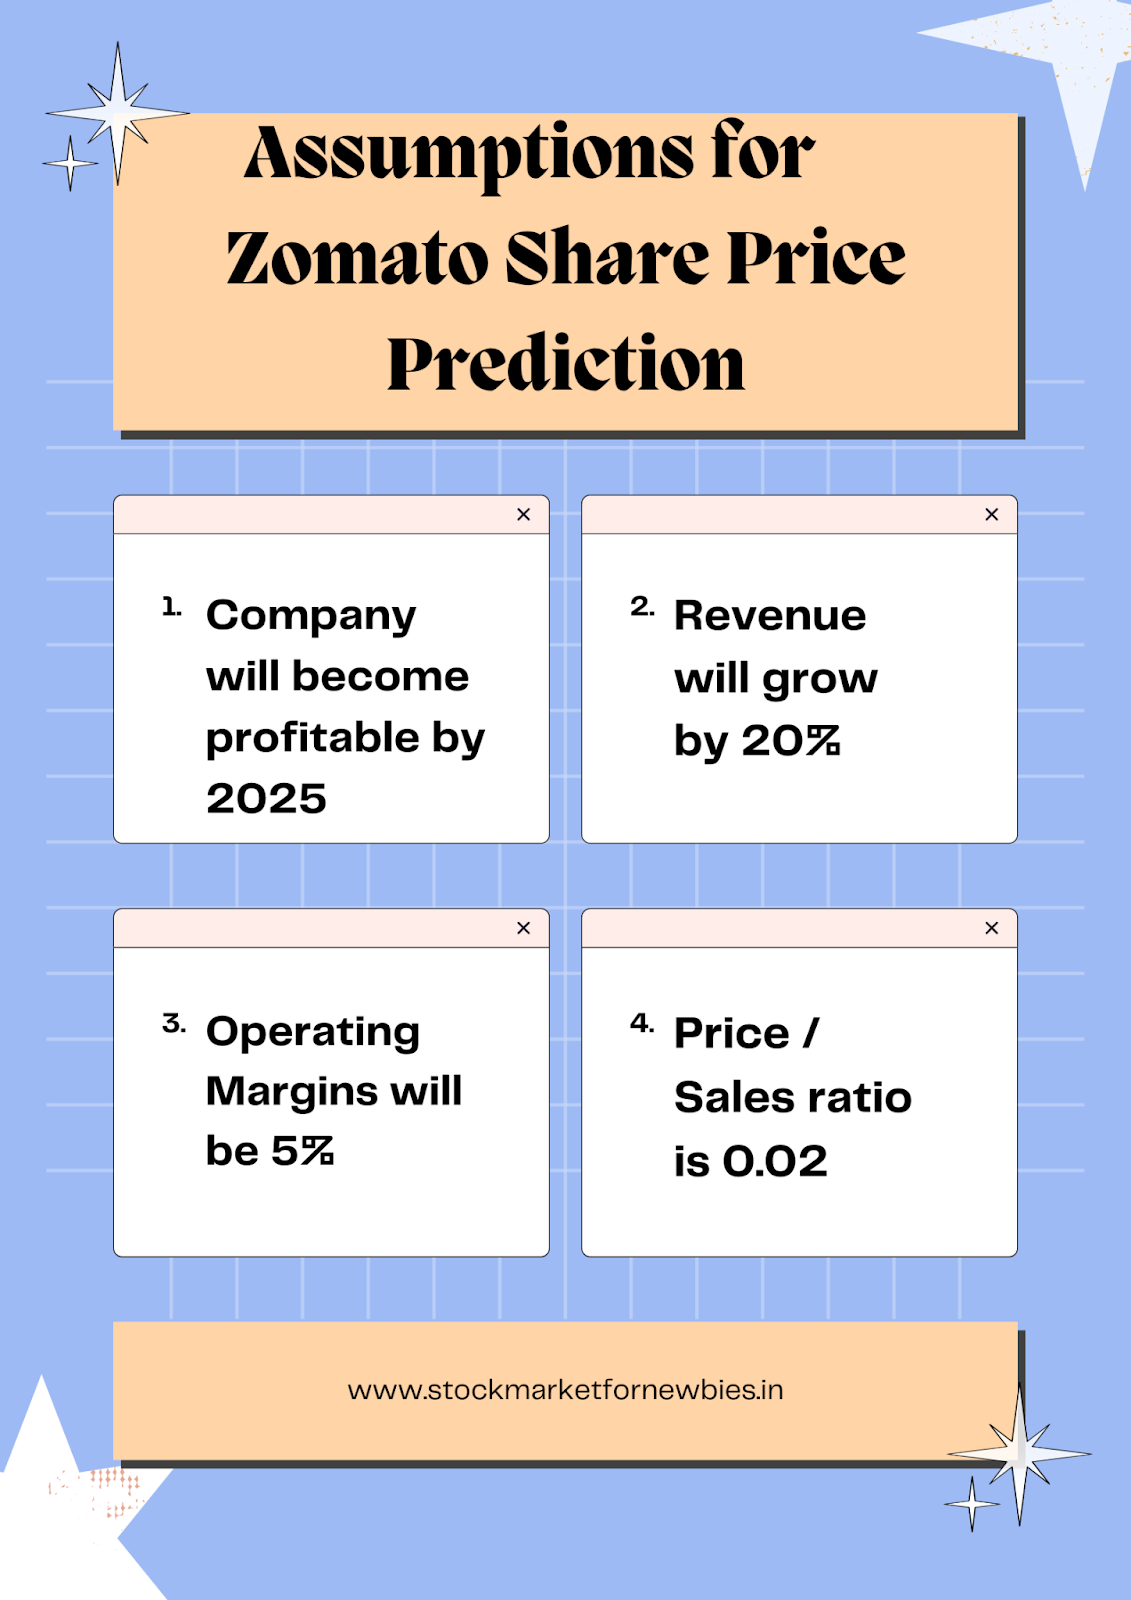 Assumptions for zomato share price prediction